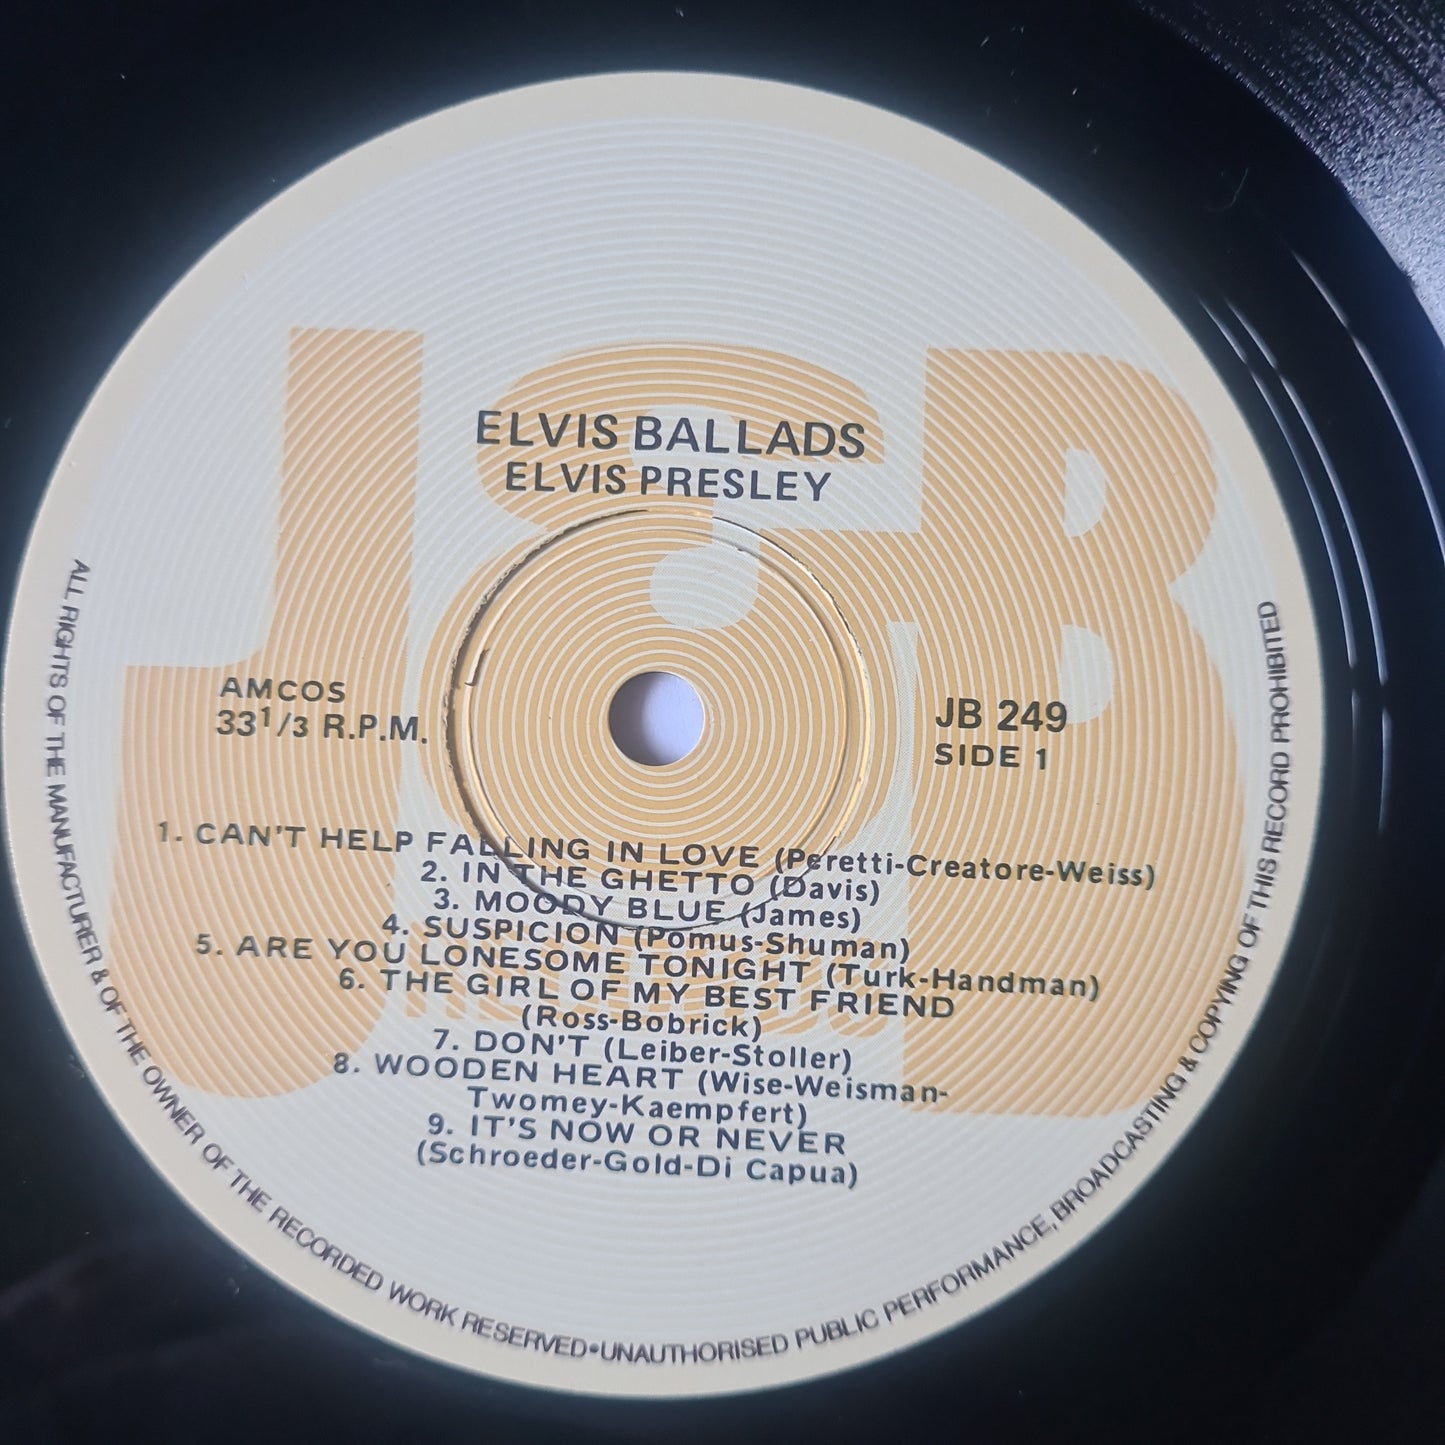 Elvis Presley – Elvis Ballads: 18 Big Hits - 1986 - Vinyl Record